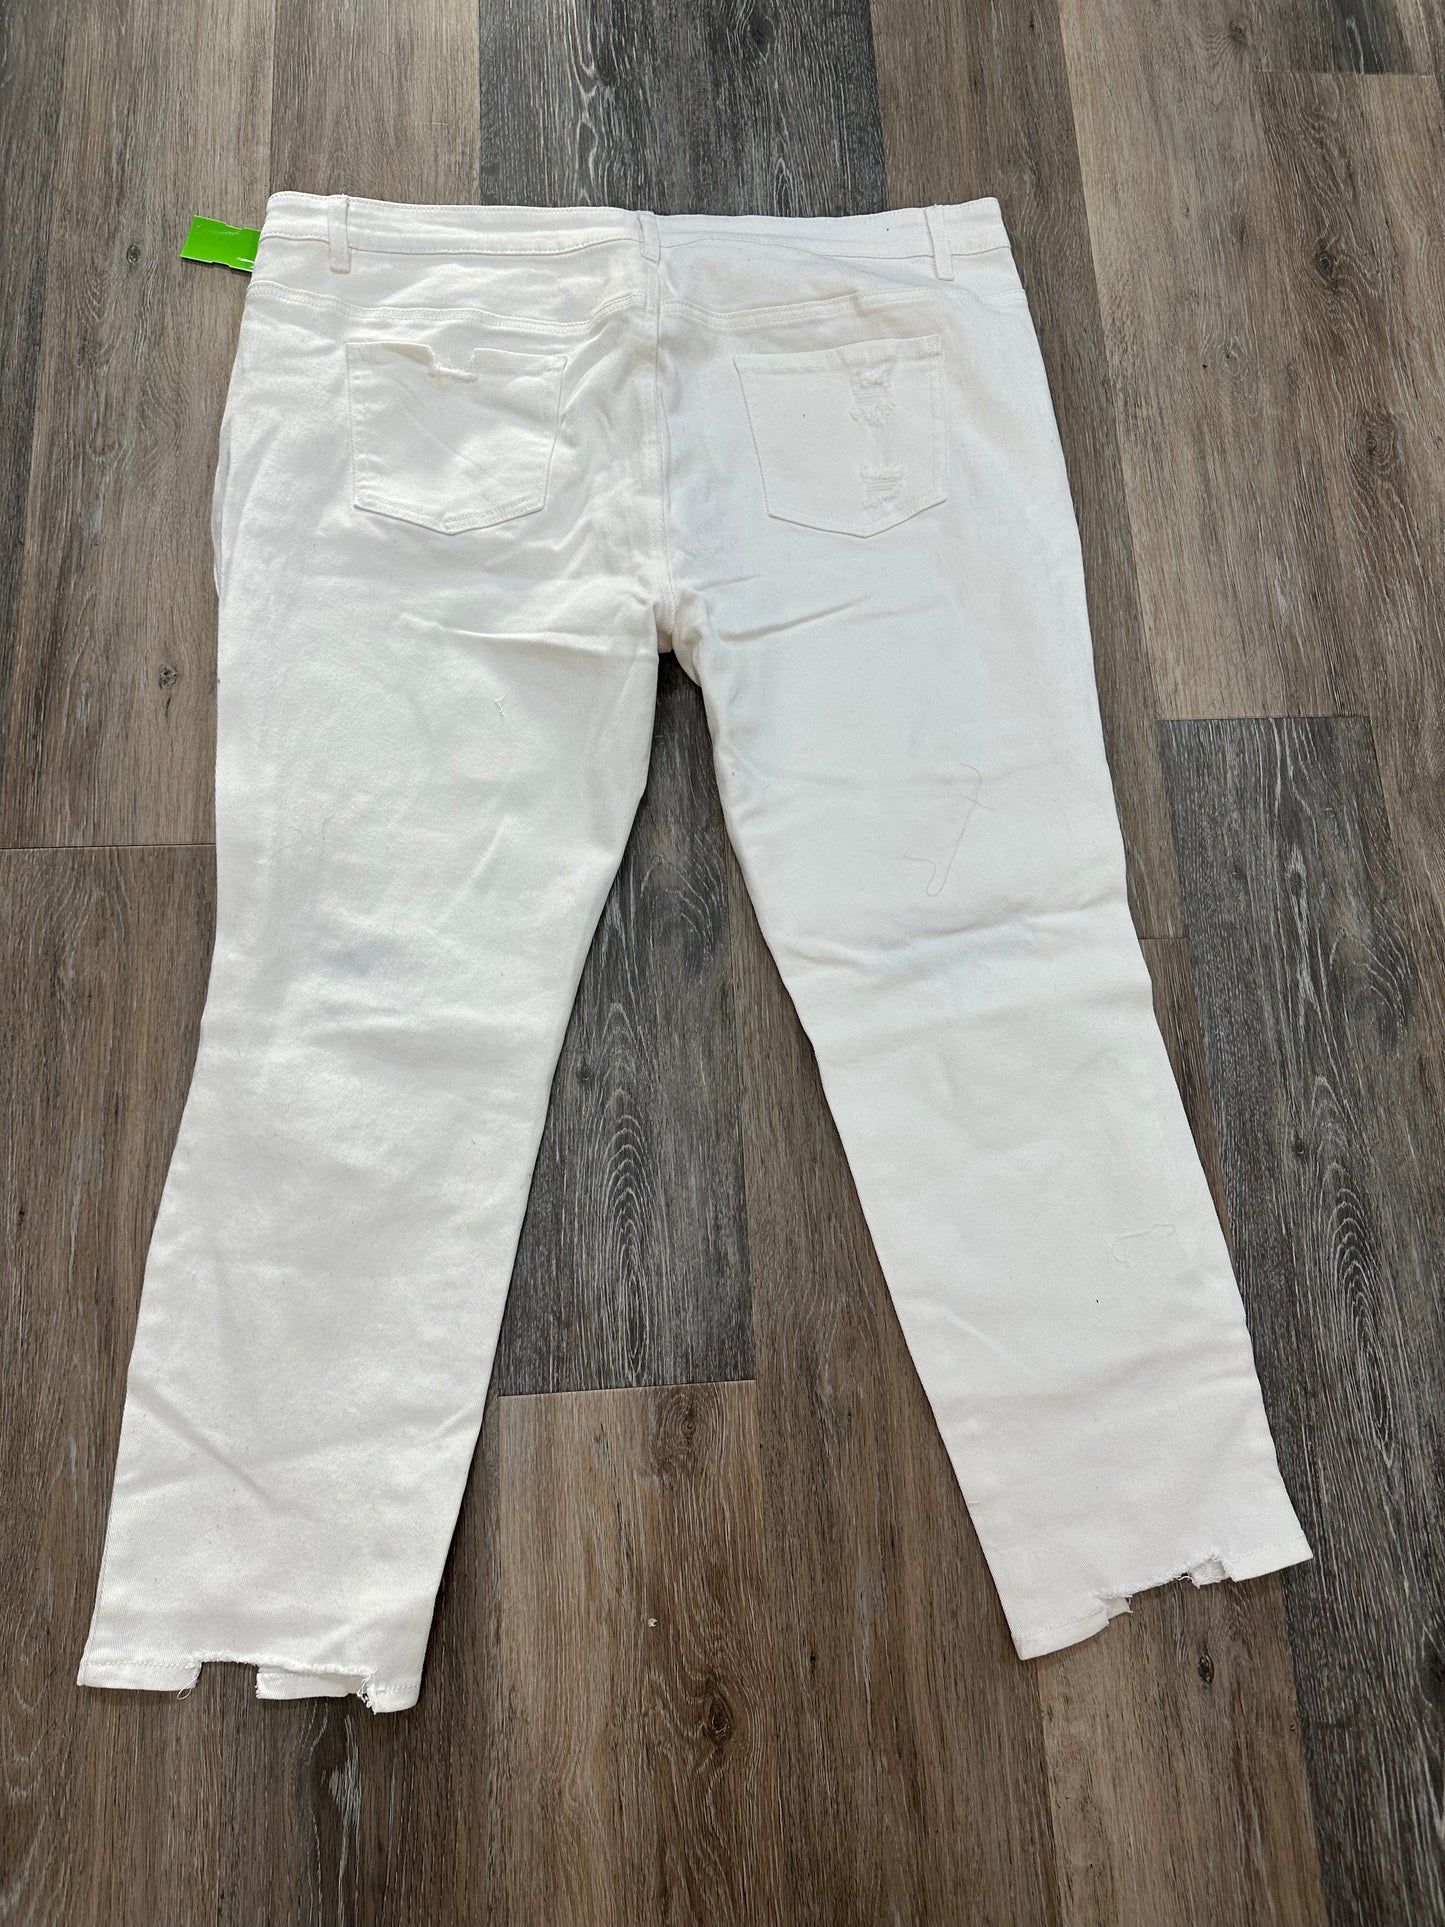 Pants Ankle By White Birch  Size: 3x